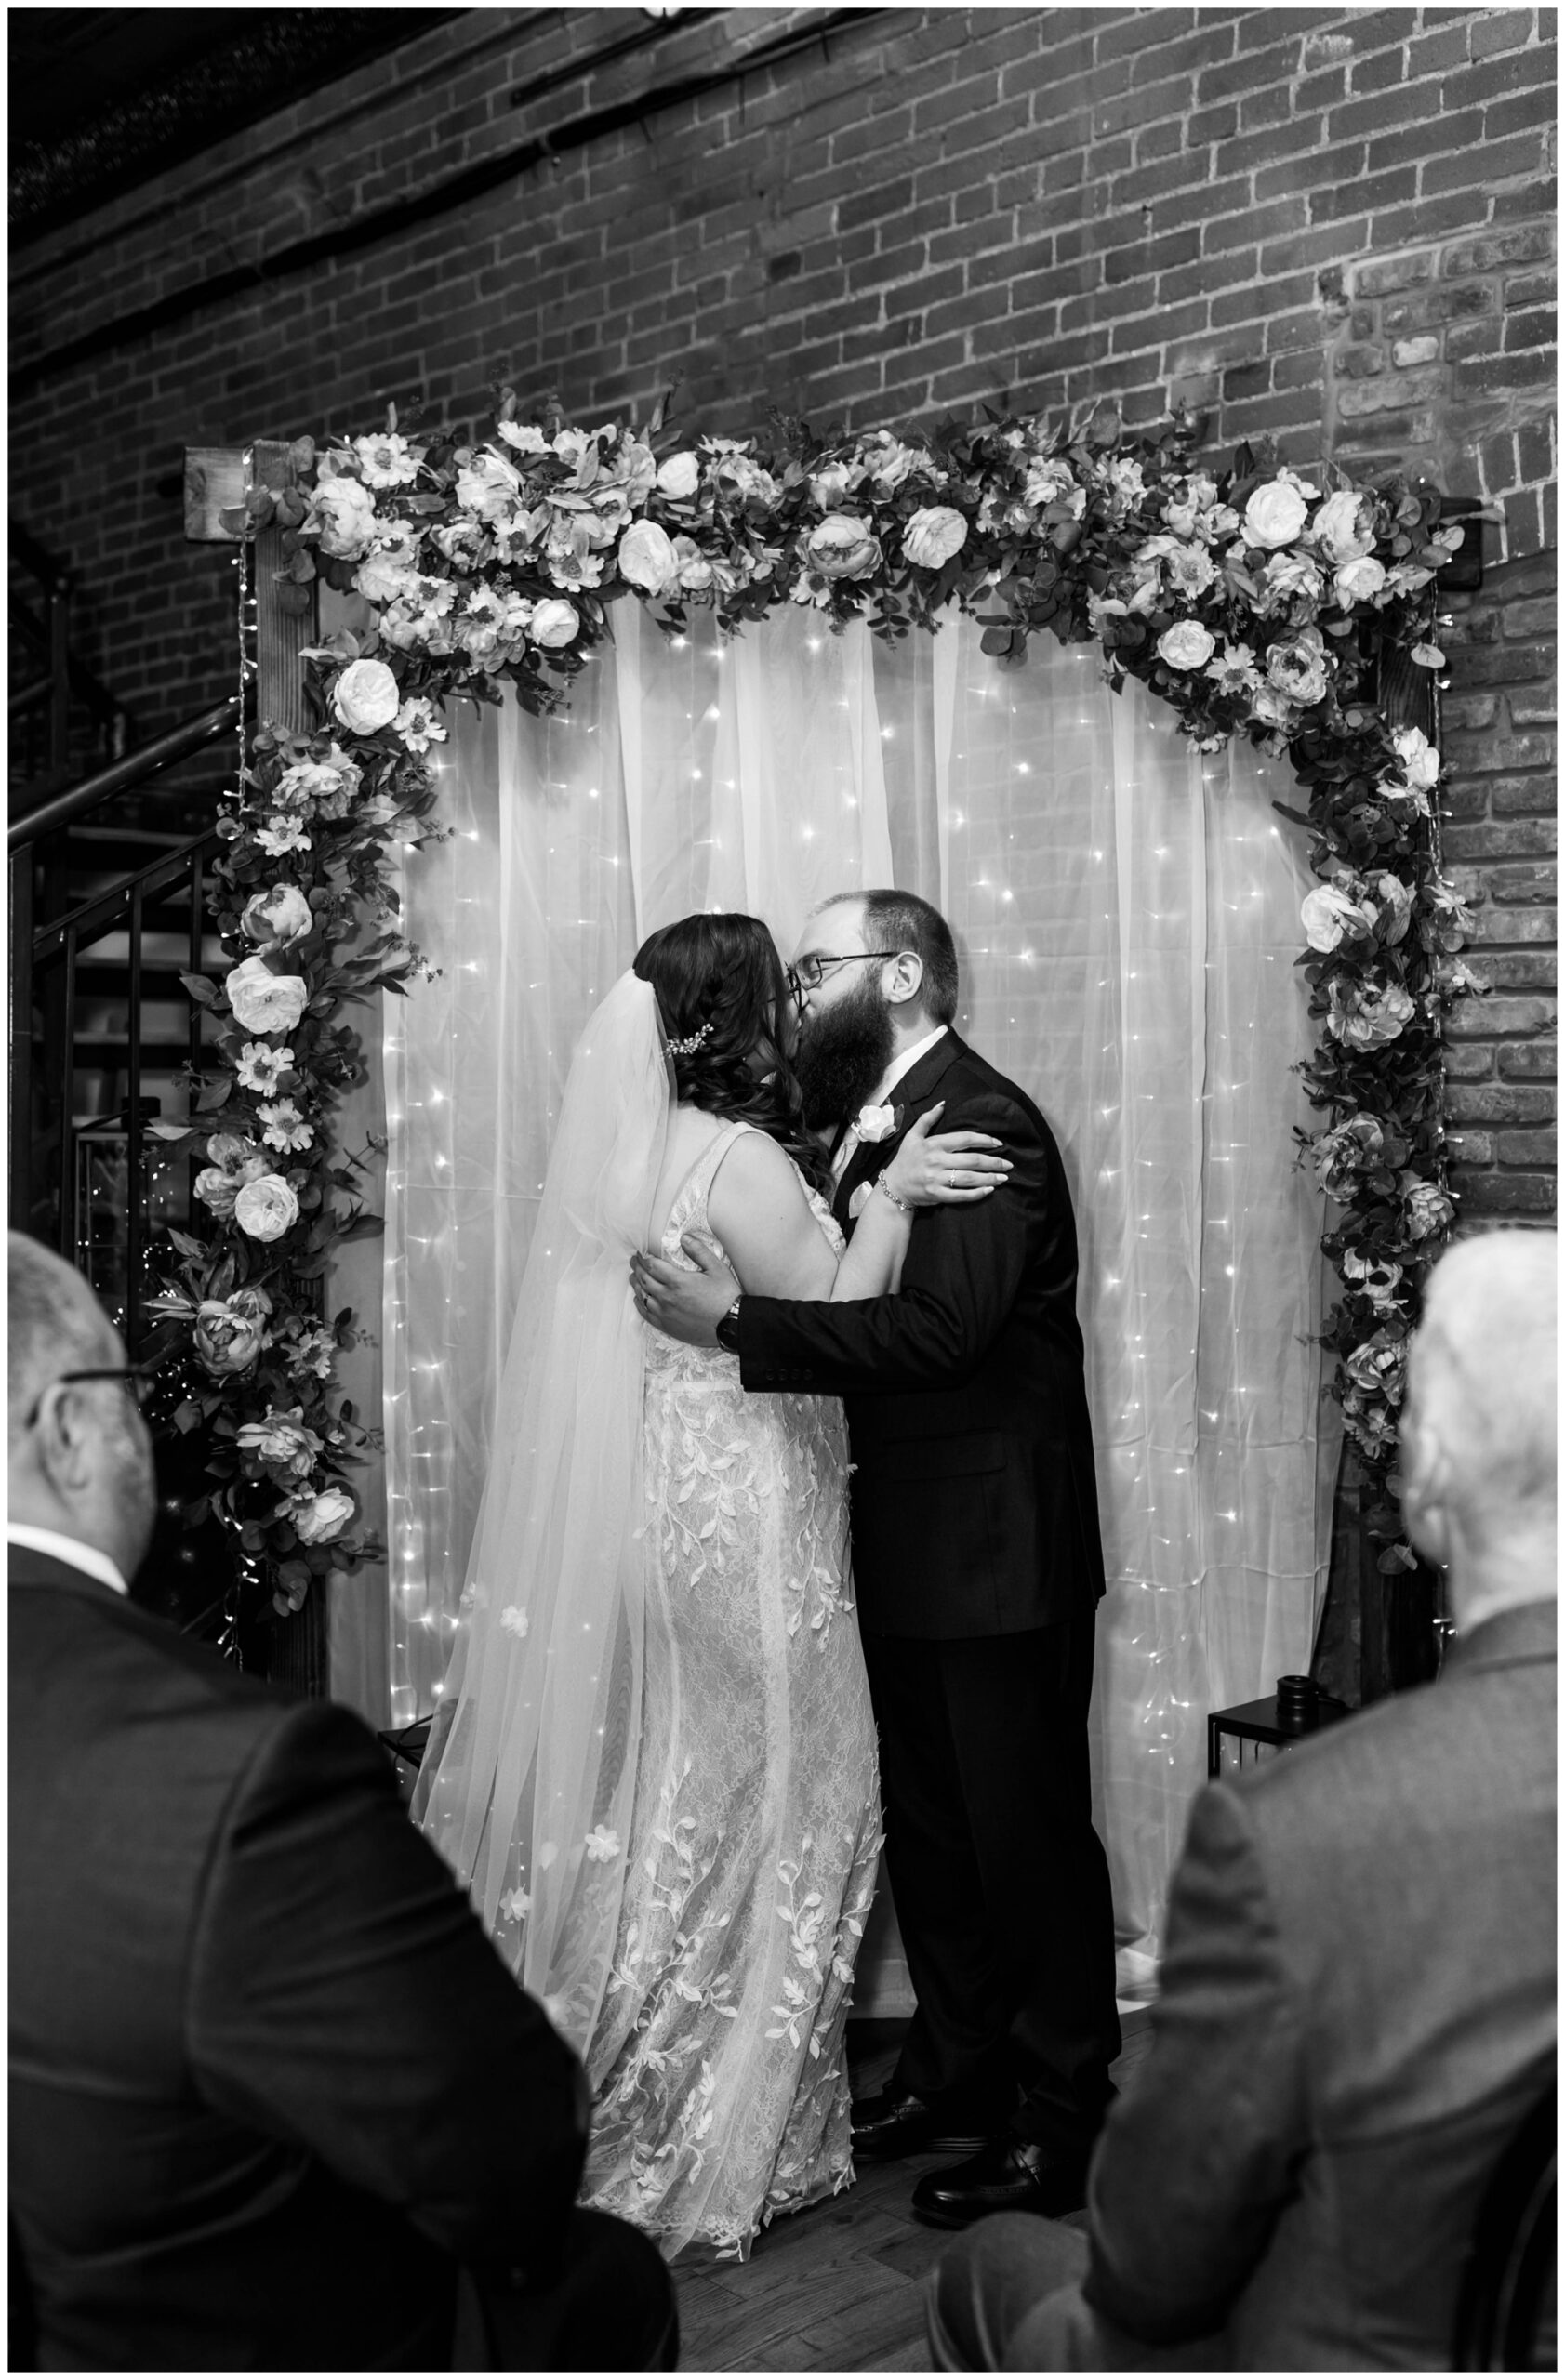 The Art Room Pittsburgh elopement / intimate wedding